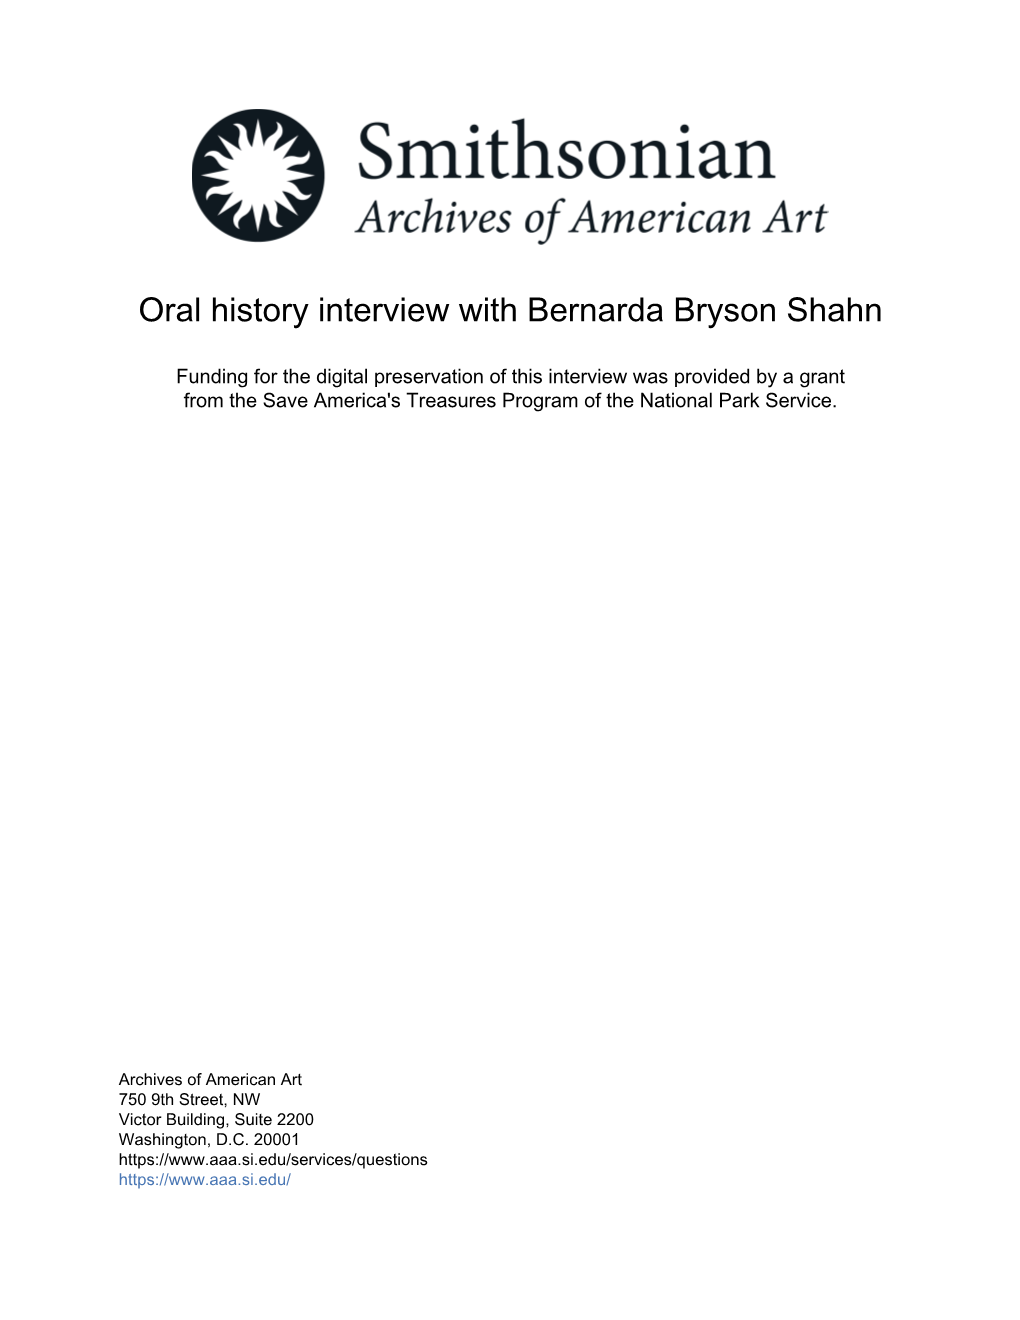 Oral History Interview with Bernarda Bryson Shahn